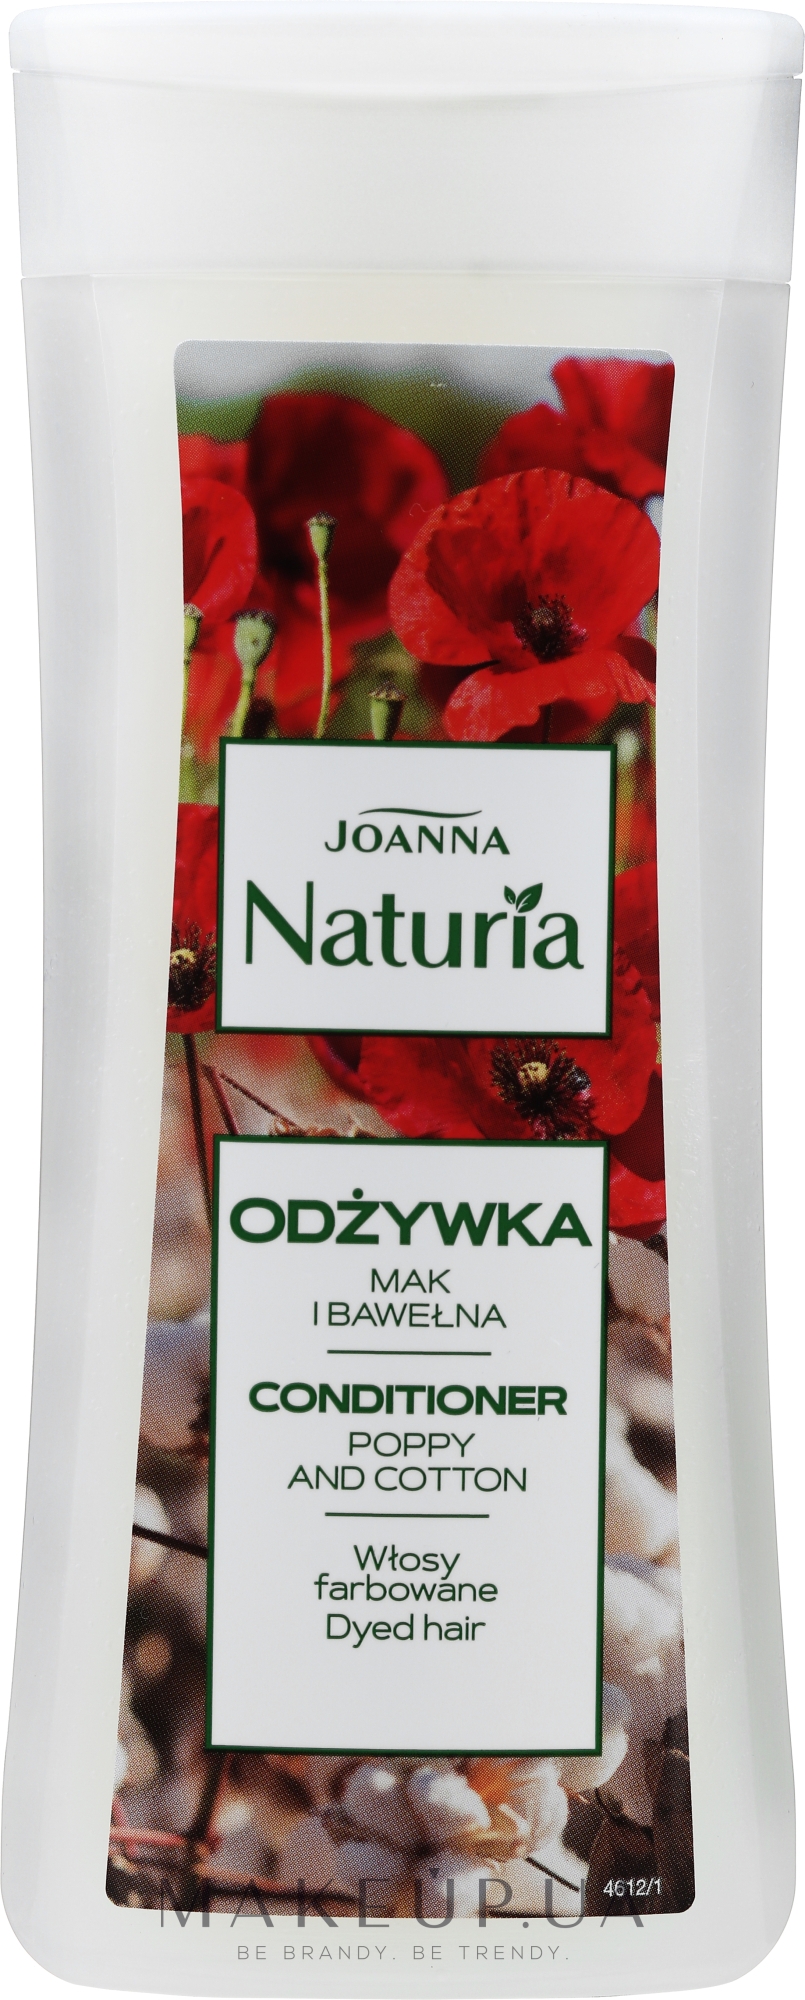 Кондиціонер для фарбованого волосся "Мак і бавовна" - Joanna Naturia Conditioner With Poppy And Cotton — фото 200g